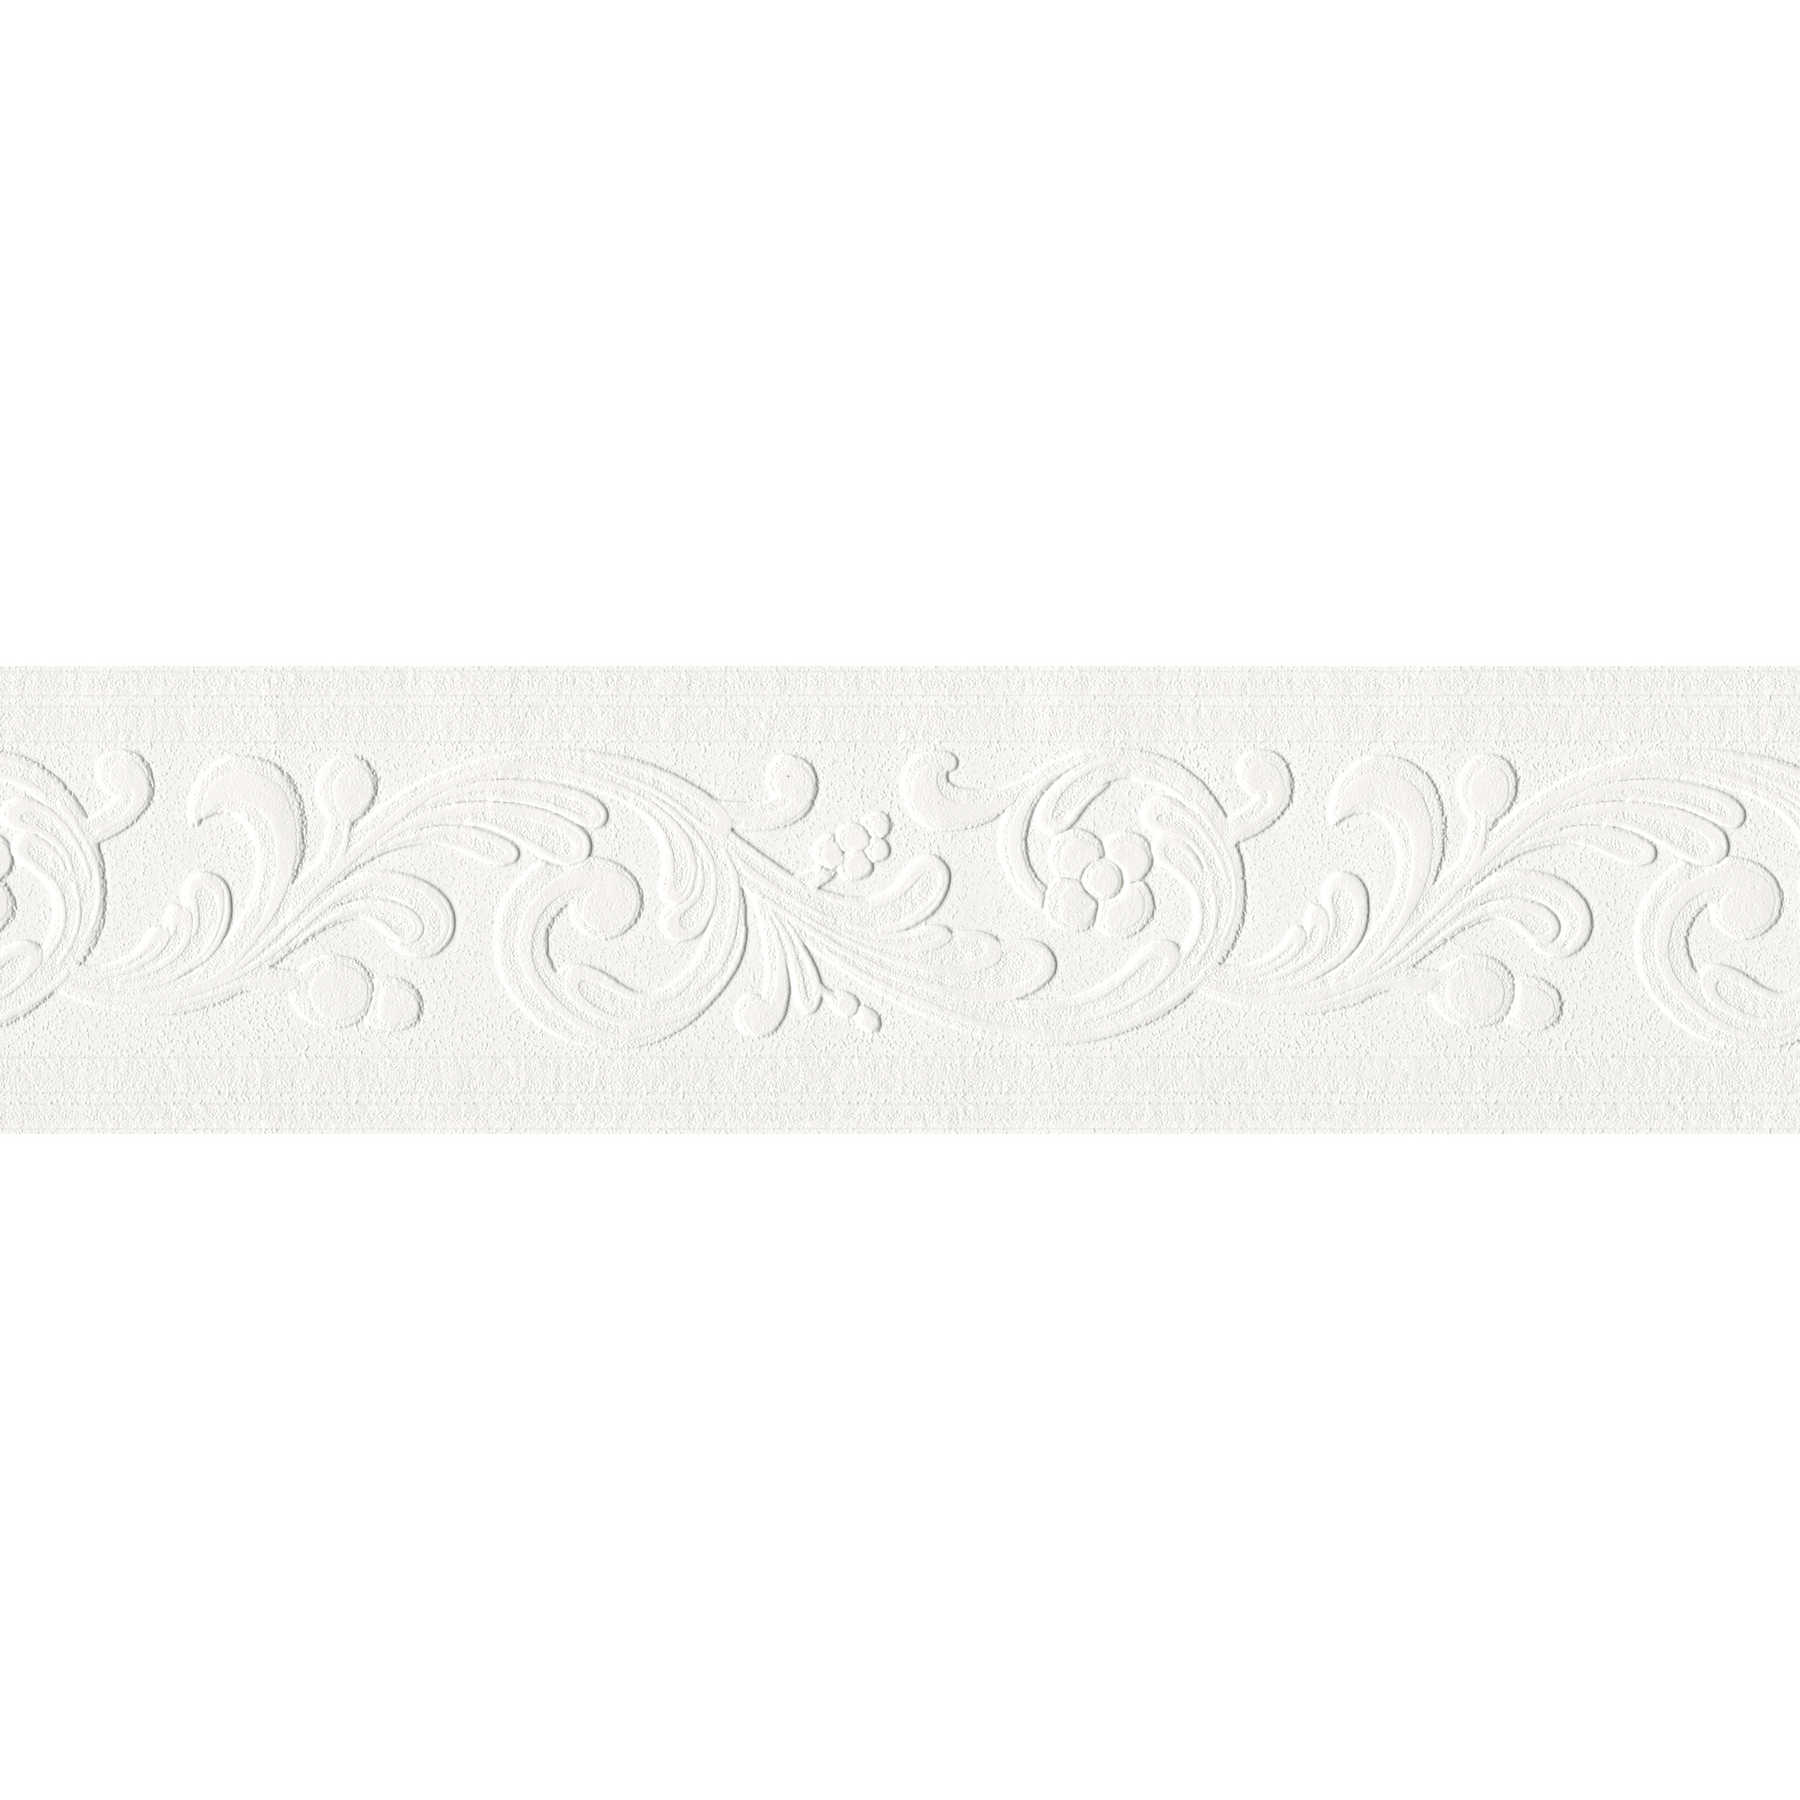         Tapetenbordüre mit Ornamentmuster & dimensionaler Struktur – Weiß
    